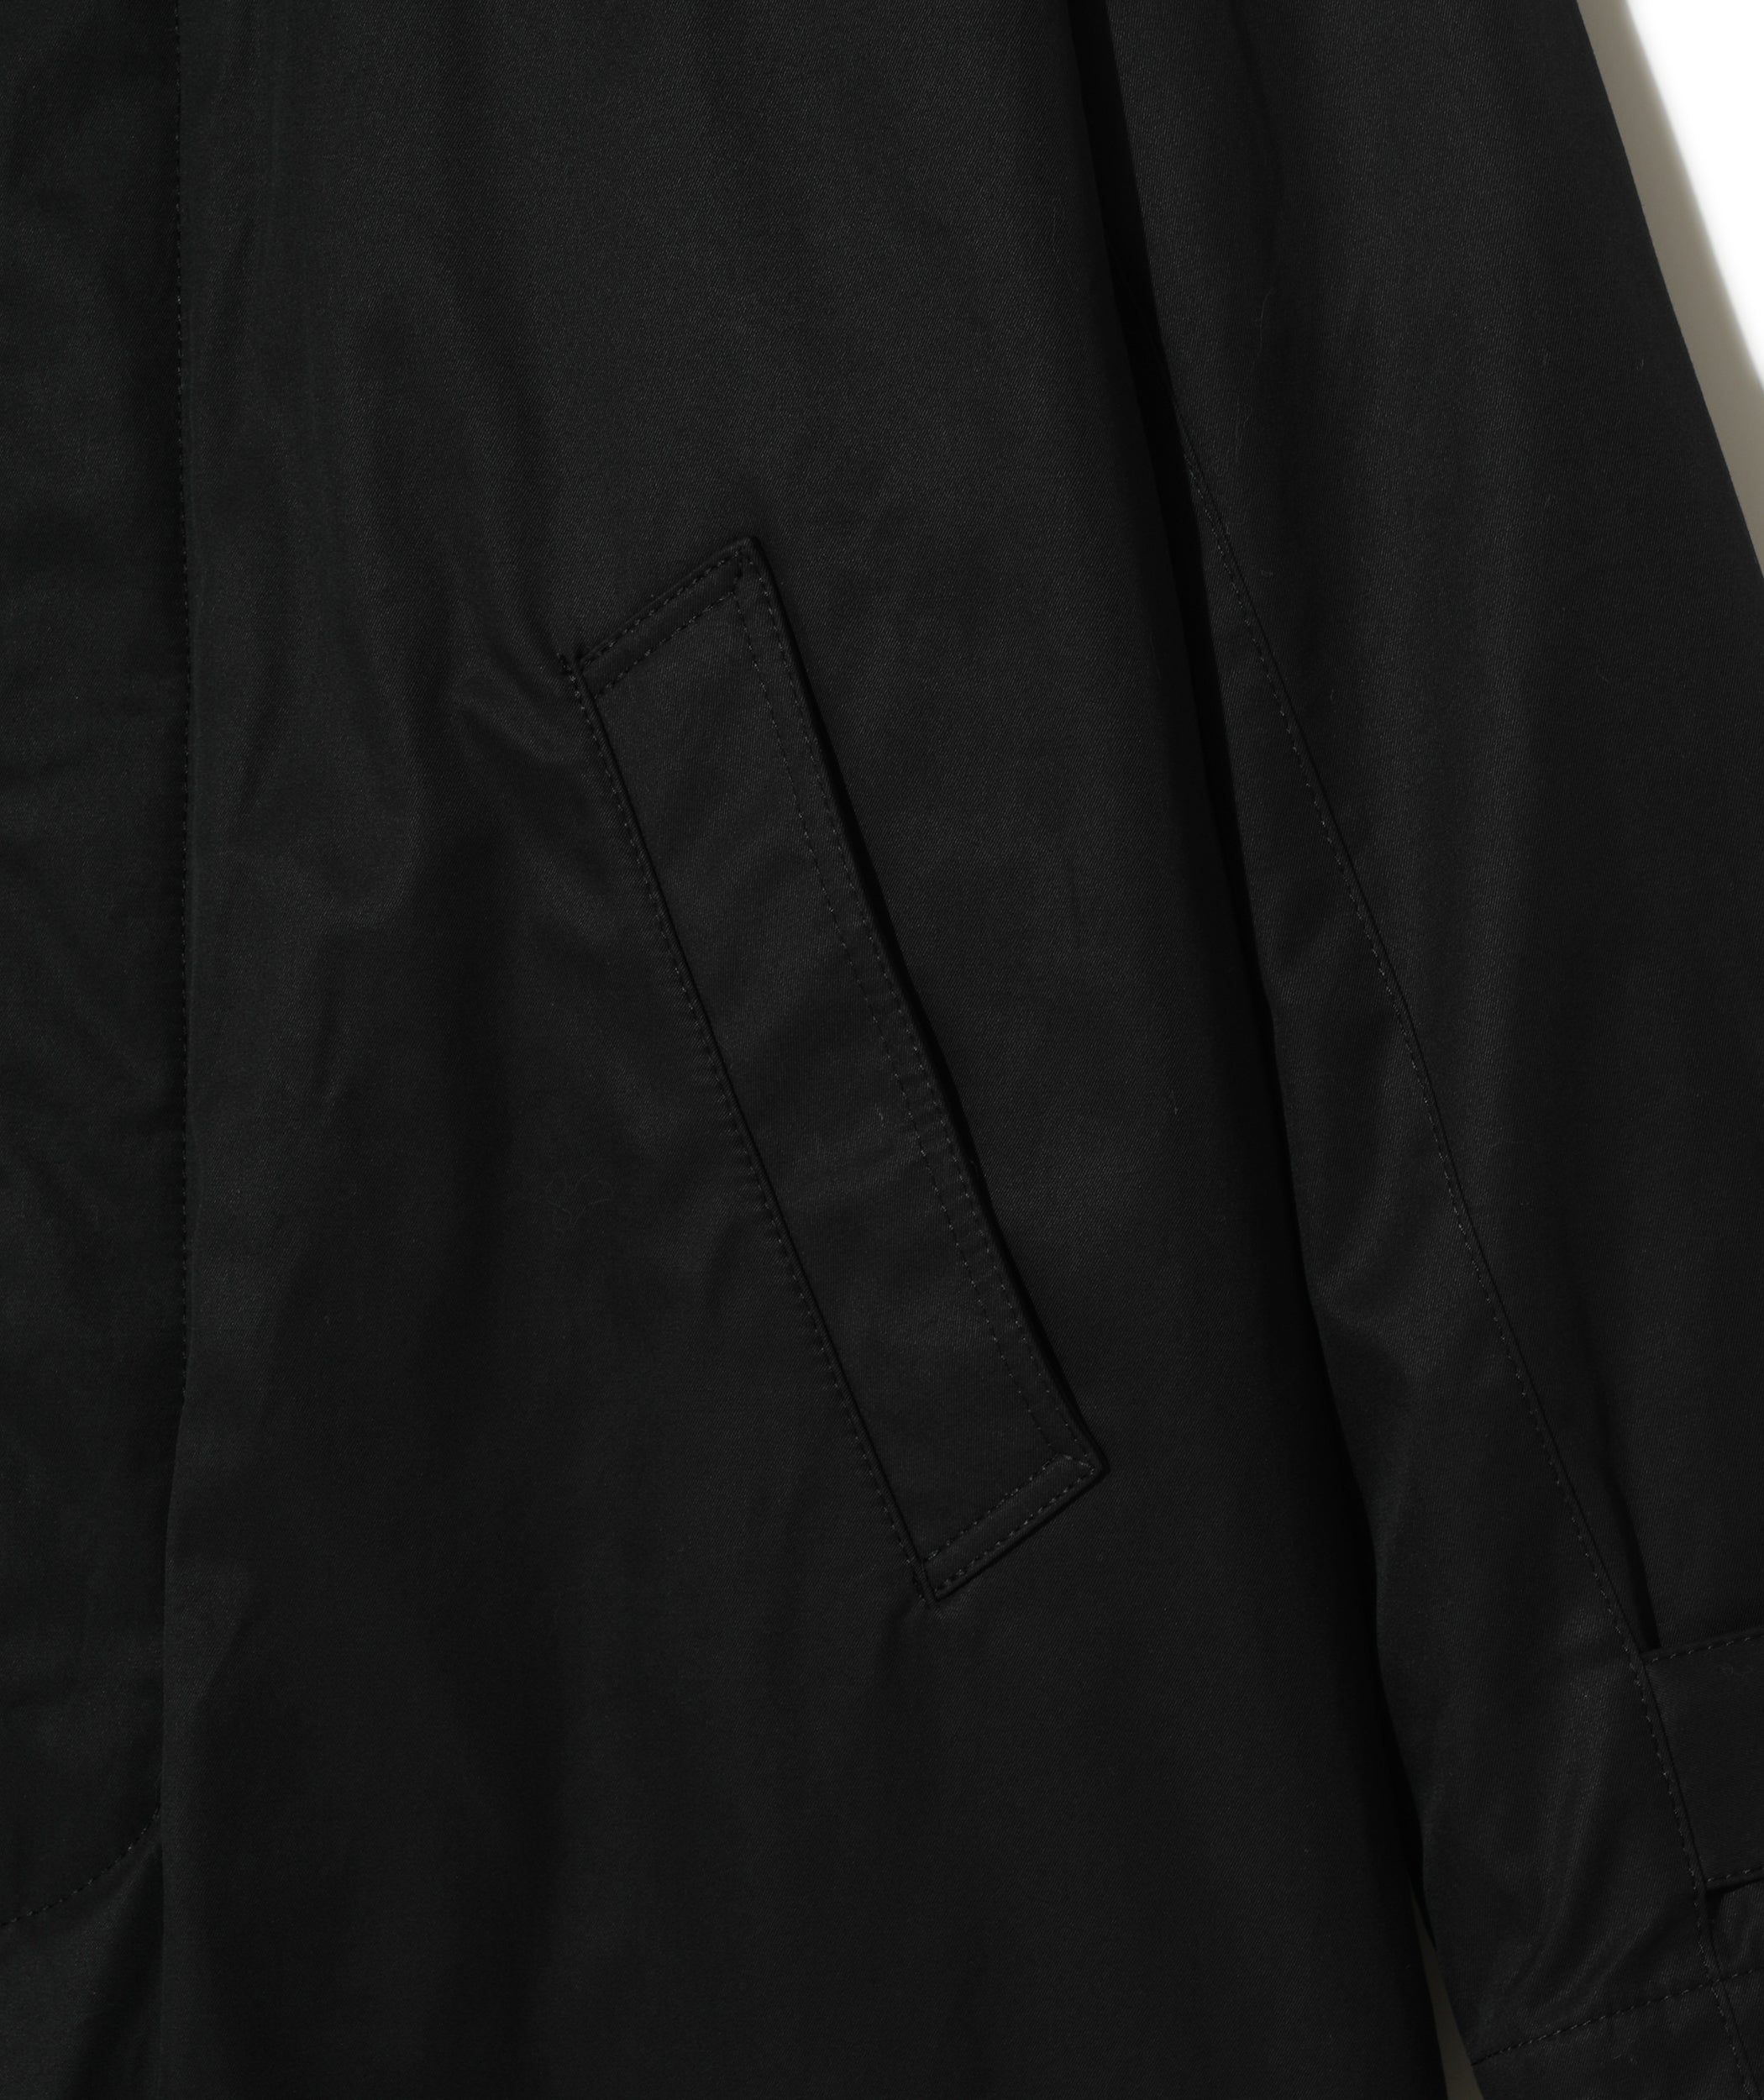 UNDERCOVER X FRAGMENT - Checker Stain Collar Ct (Frgmt - (Black